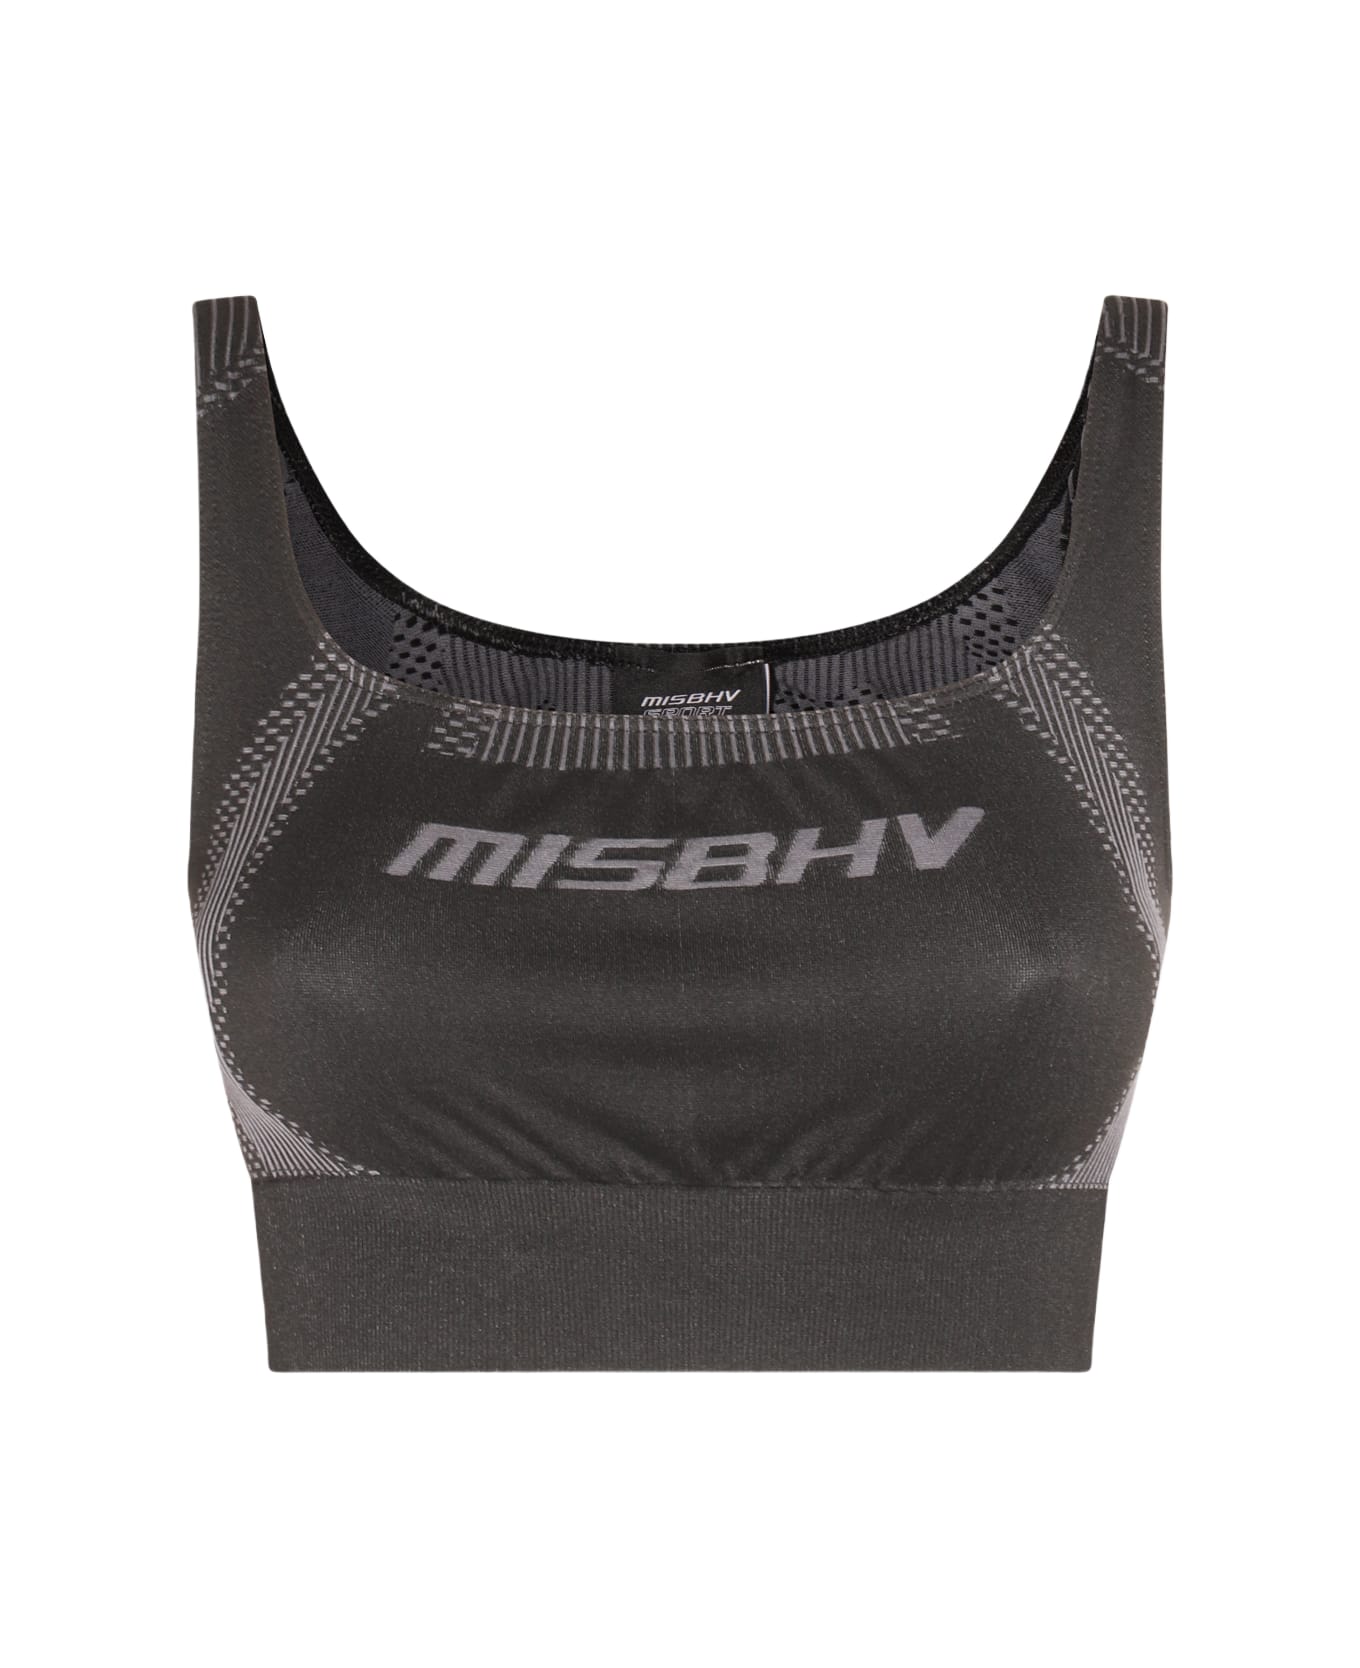 MISBHV Muted Black Stretch Sport Bra Top - MUTED BLACK タンクトップ